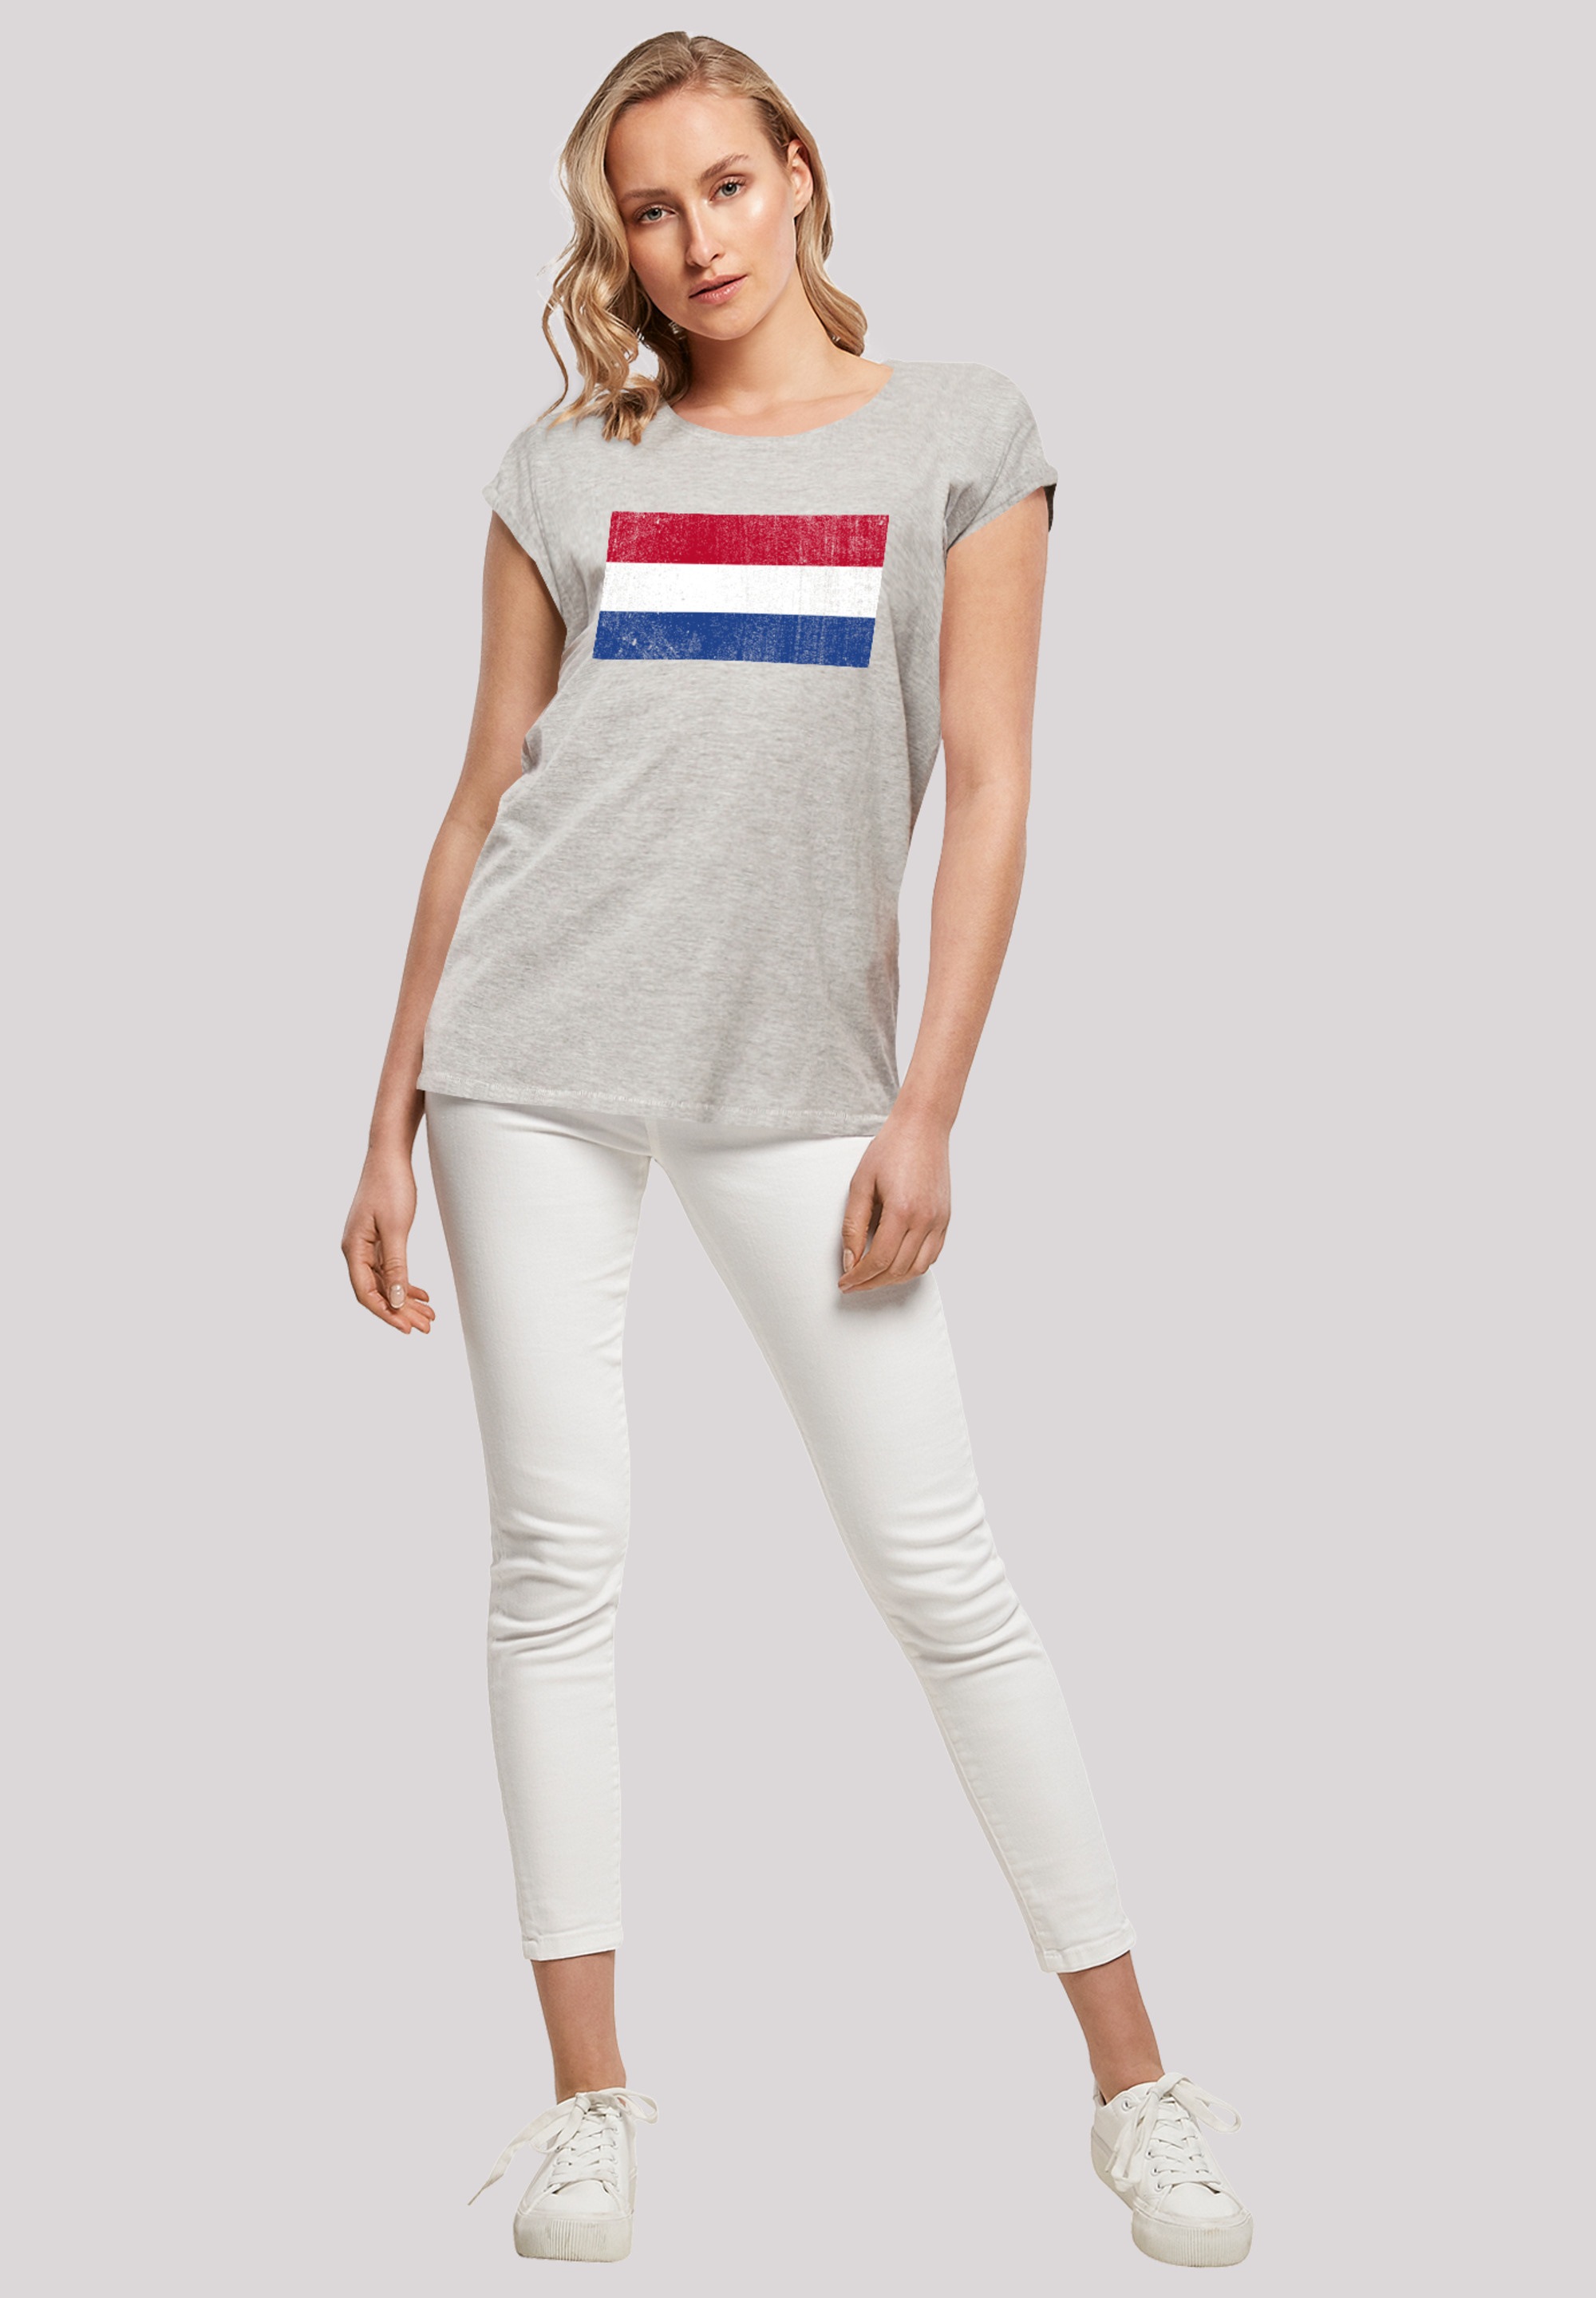 kaufen »Netherlands distressed«, F4NT4STIC Flagge Holland Print NIederlande T-Shirt